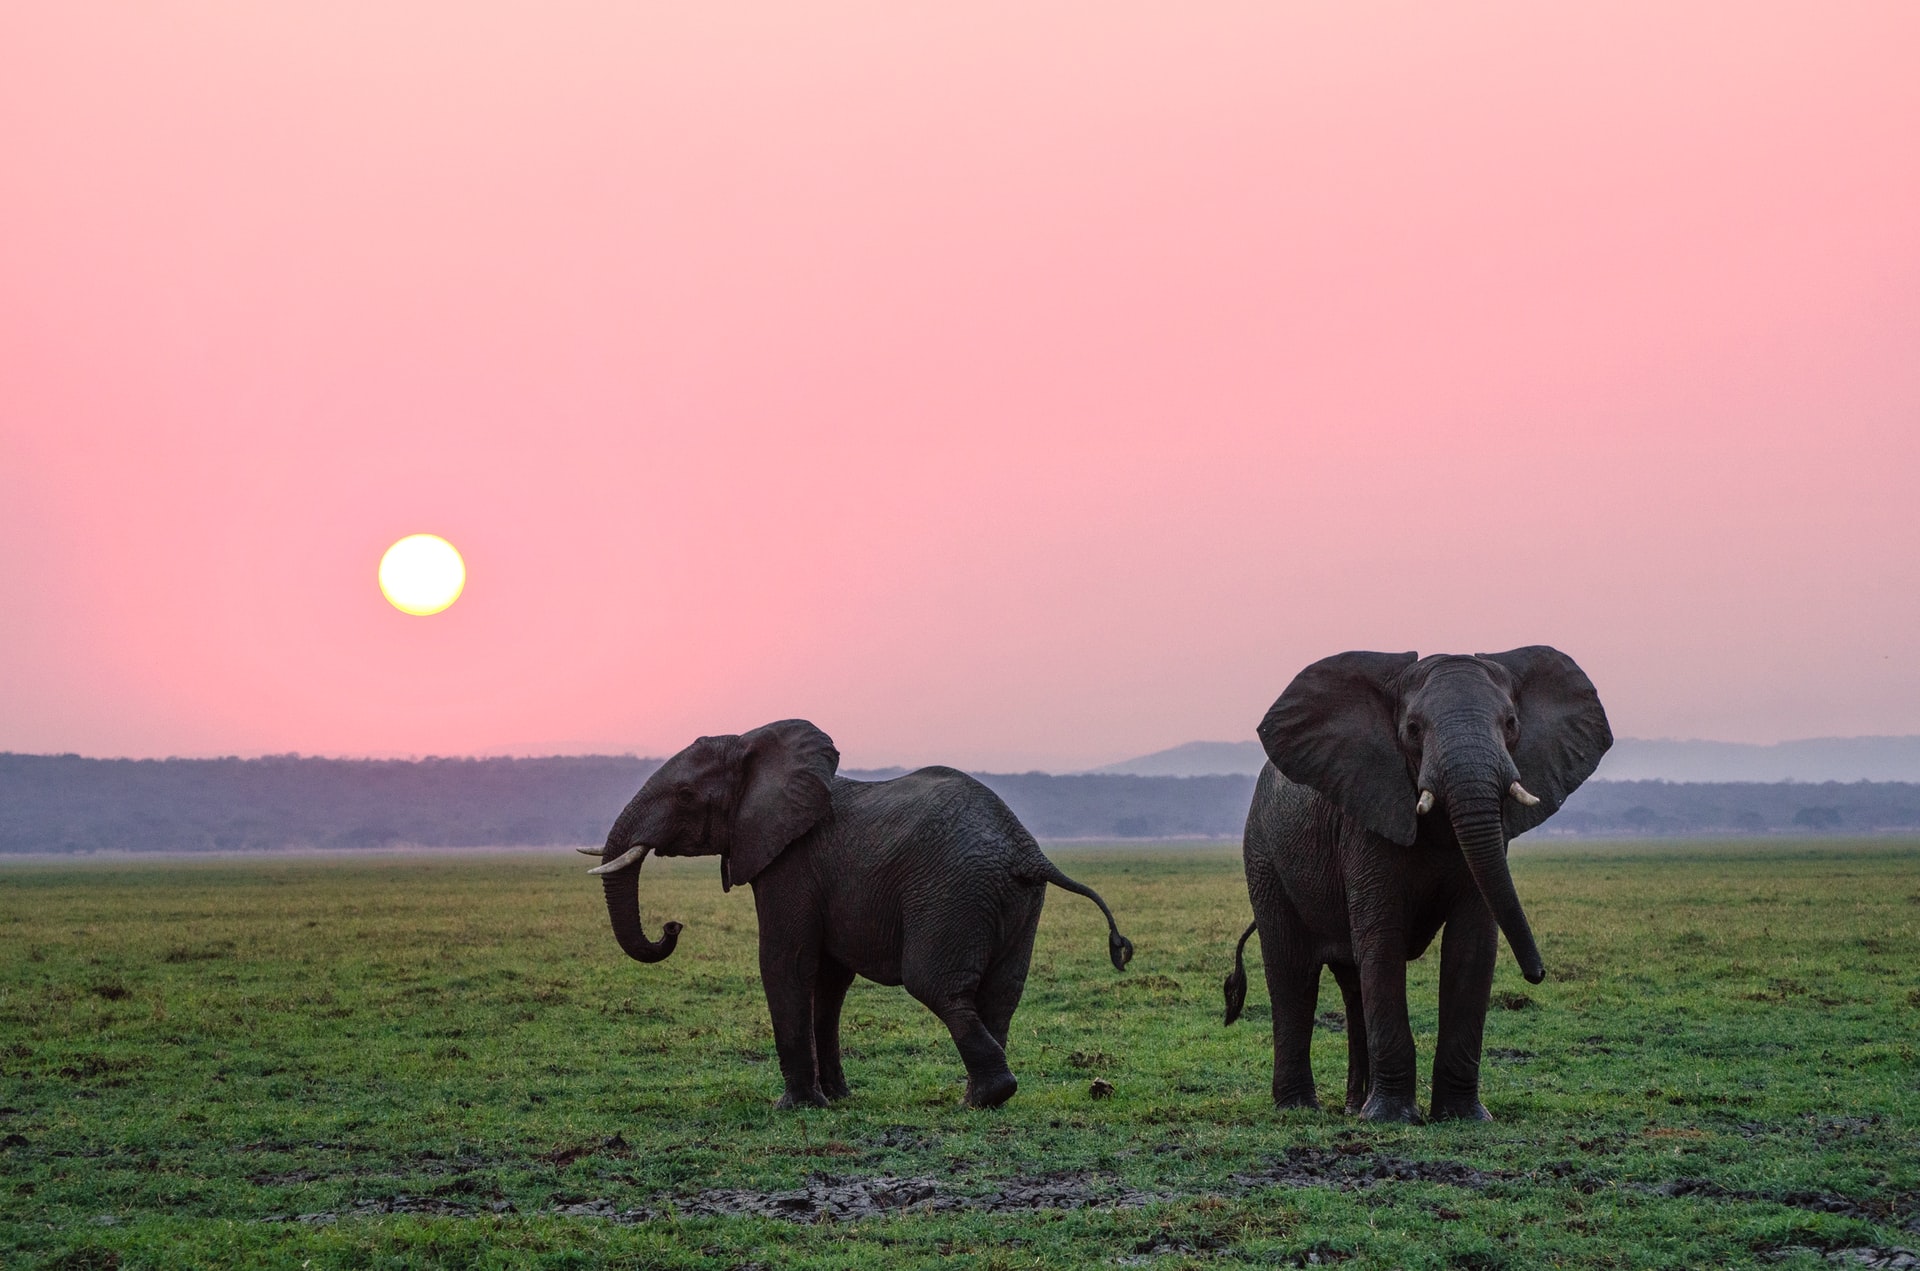 Image of Elephants by Mylon Ollila on Unsplash